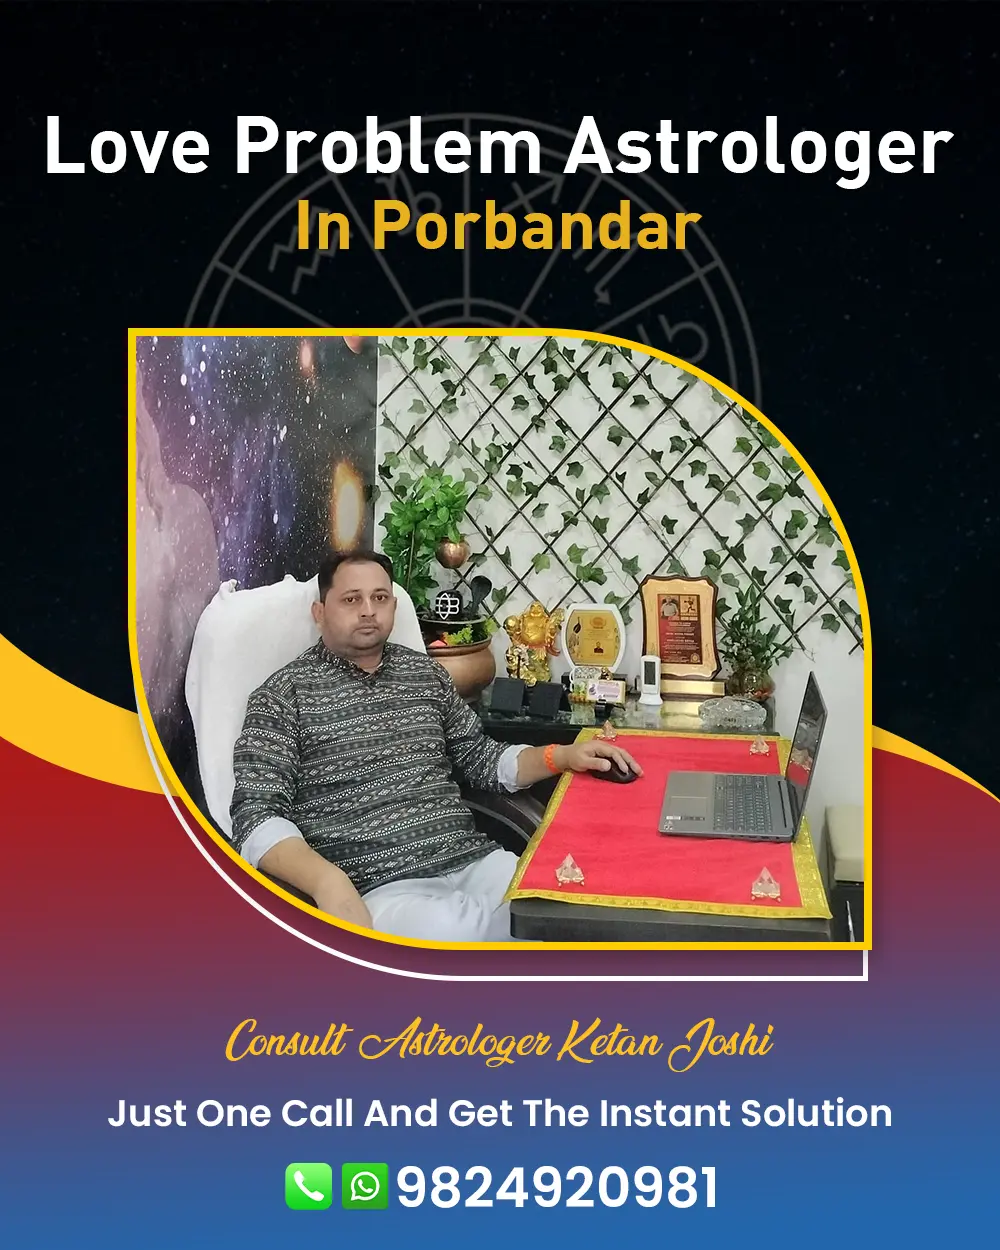 Love Problem Astrologer In Porbandar